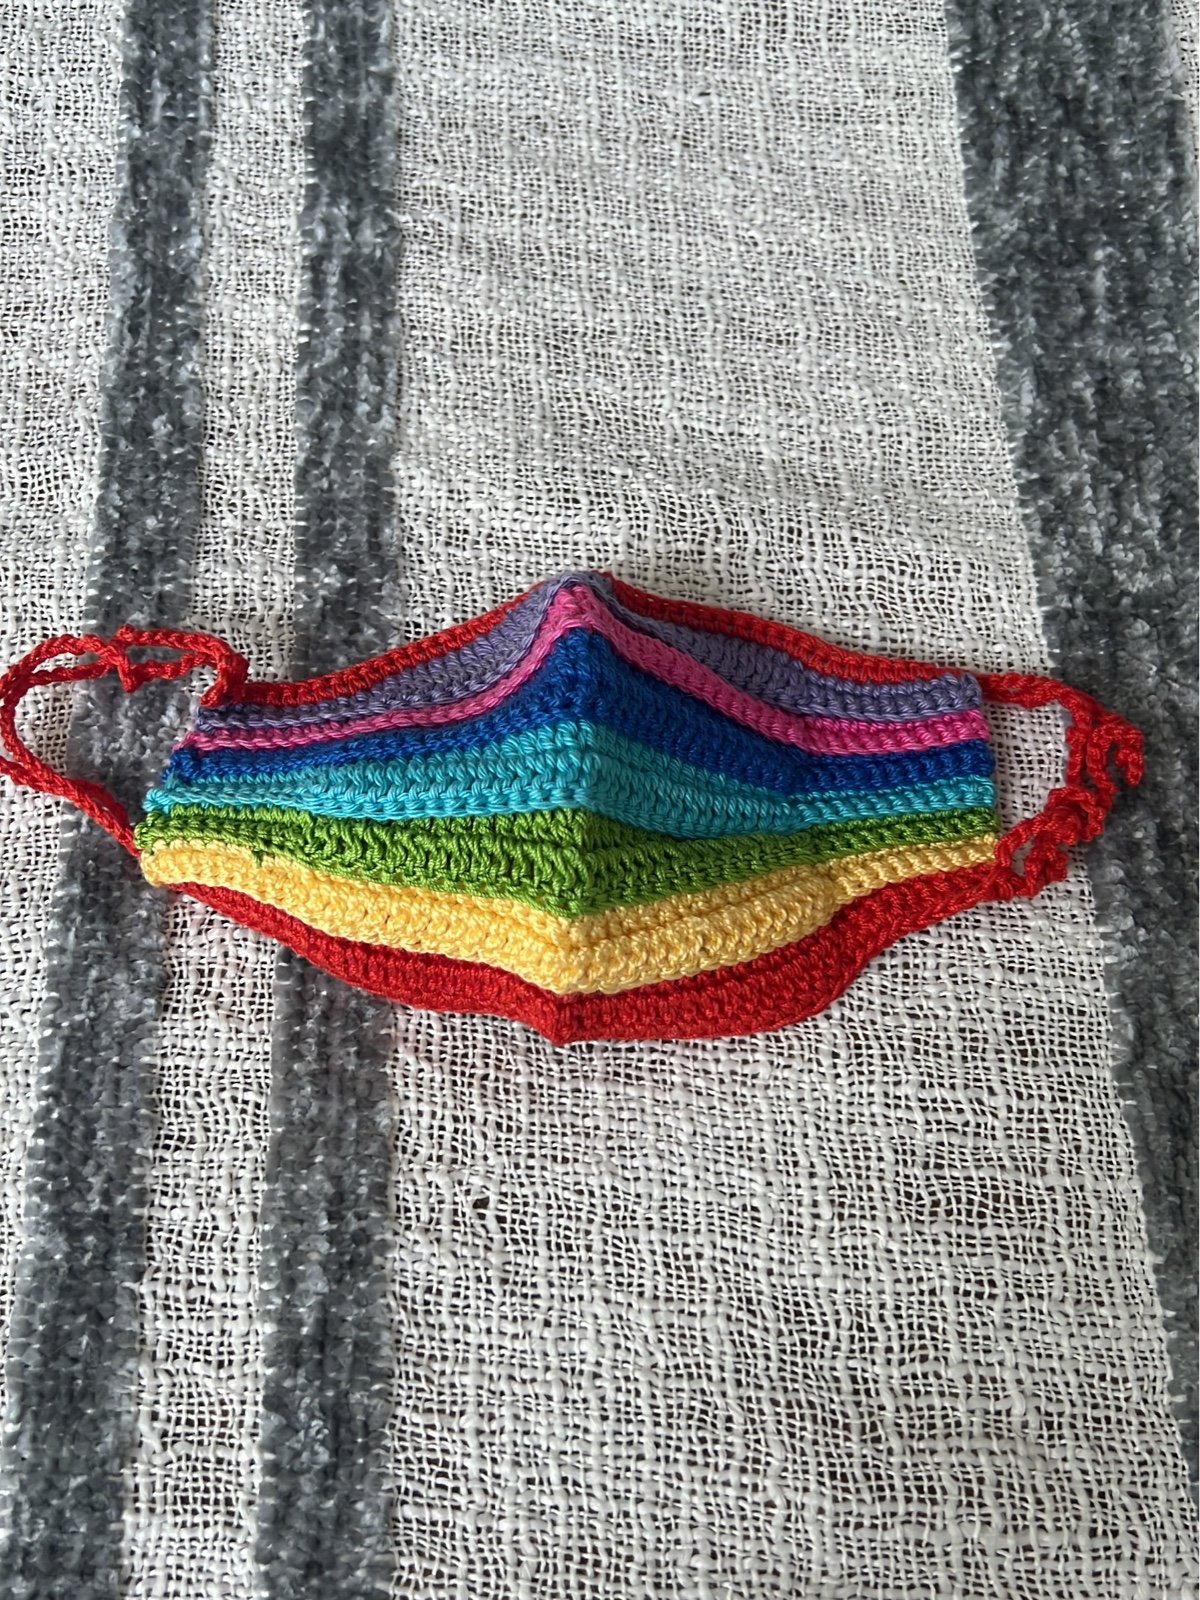 Amigurumi crochet handmade rainbow colored mask DXI9qNvDX